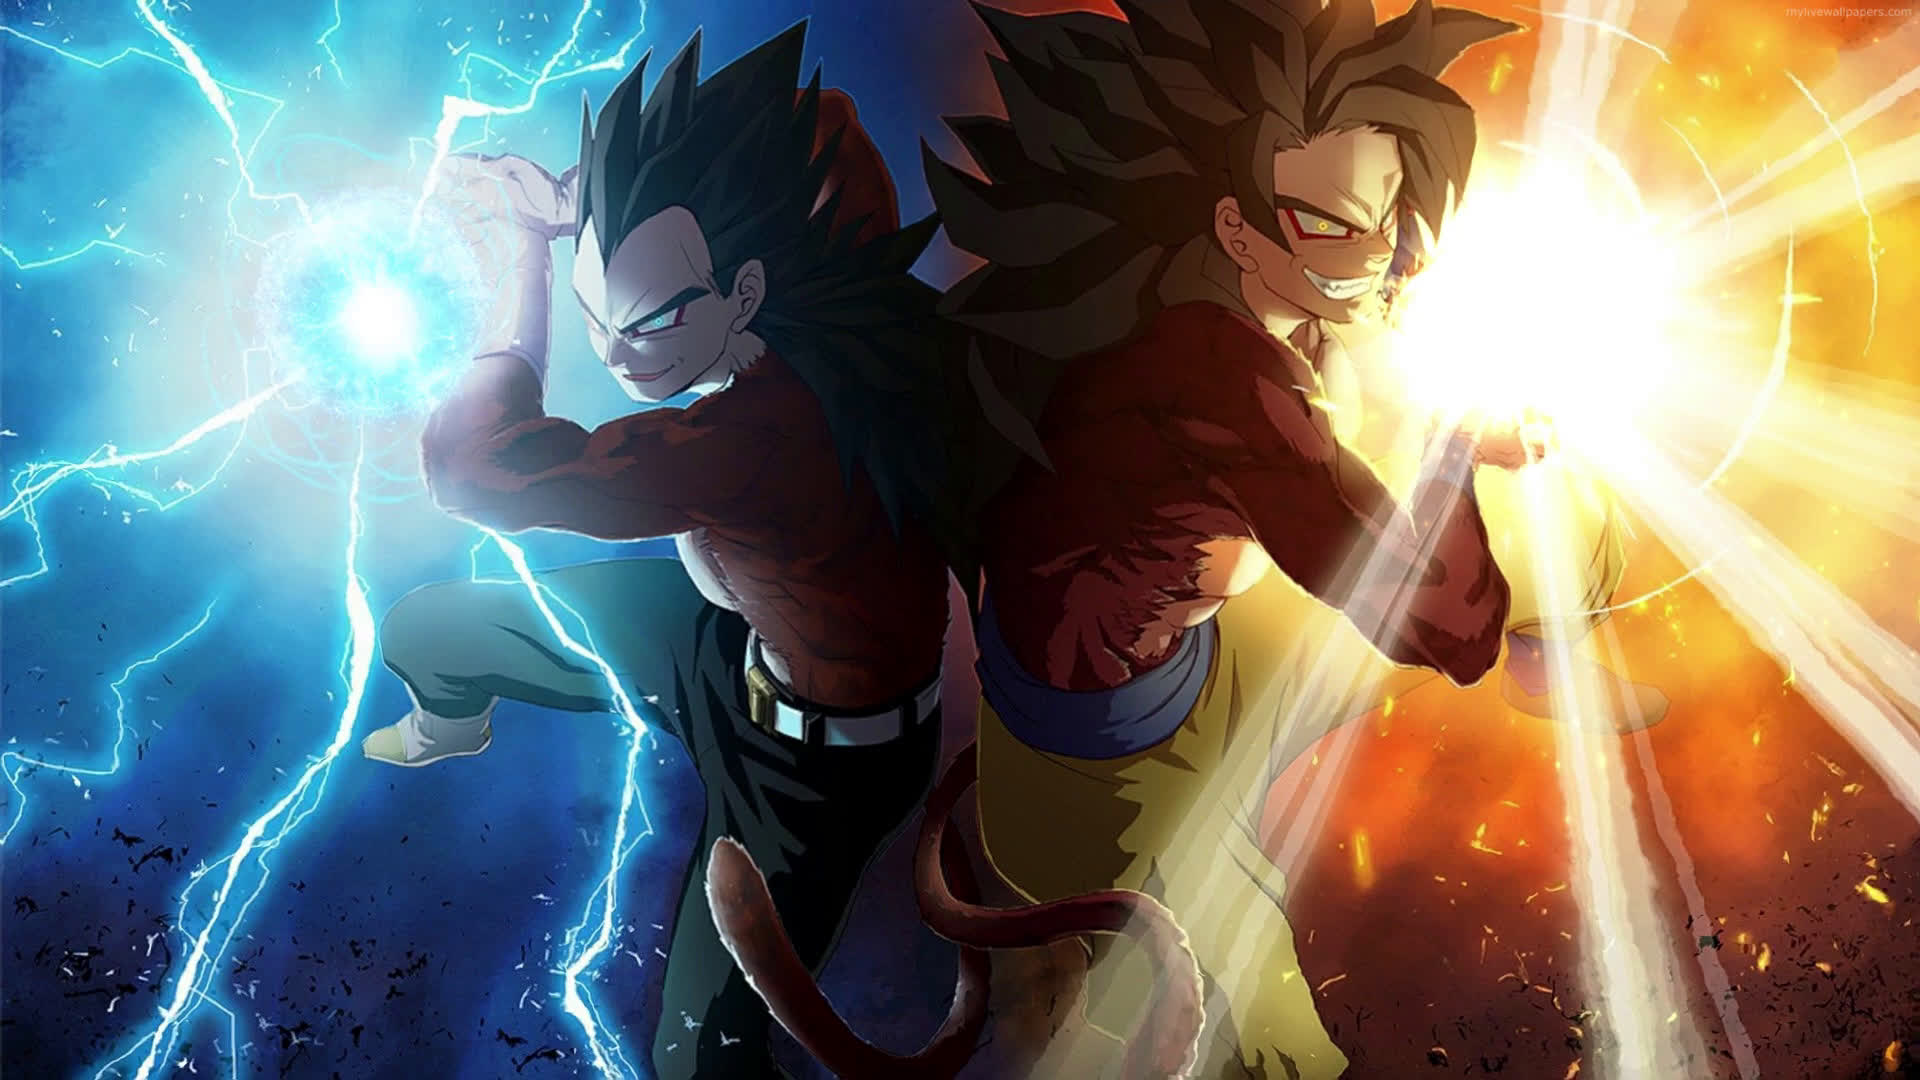 Super Saiyan 4 Goku & Vegeta from Dragon Ball GT - Shadow Dragon Saga  [Dragon Ball Z Dokkan Battle Art] HD wallpaper download